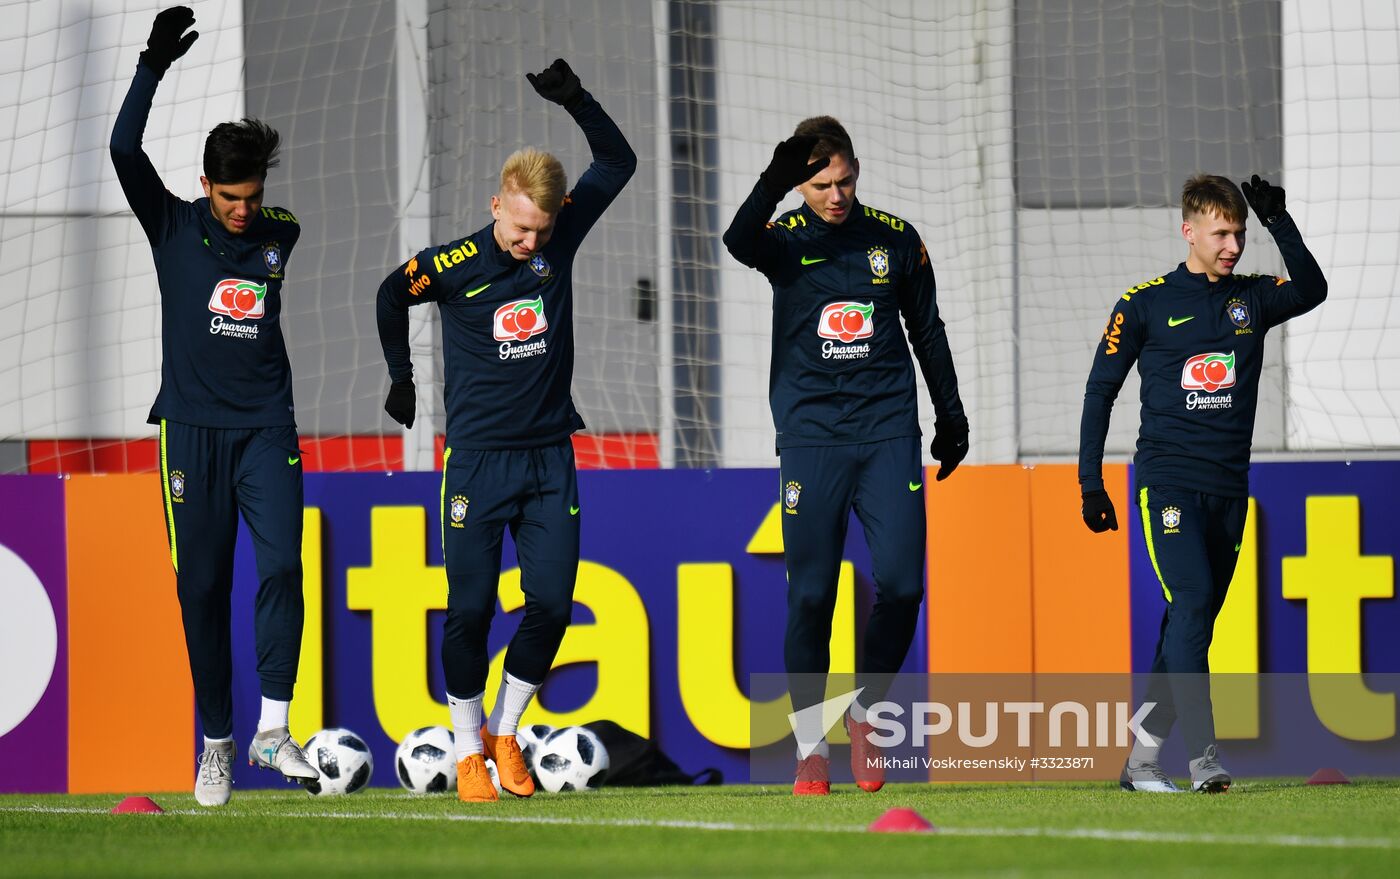 Football. Brazilian team's training session